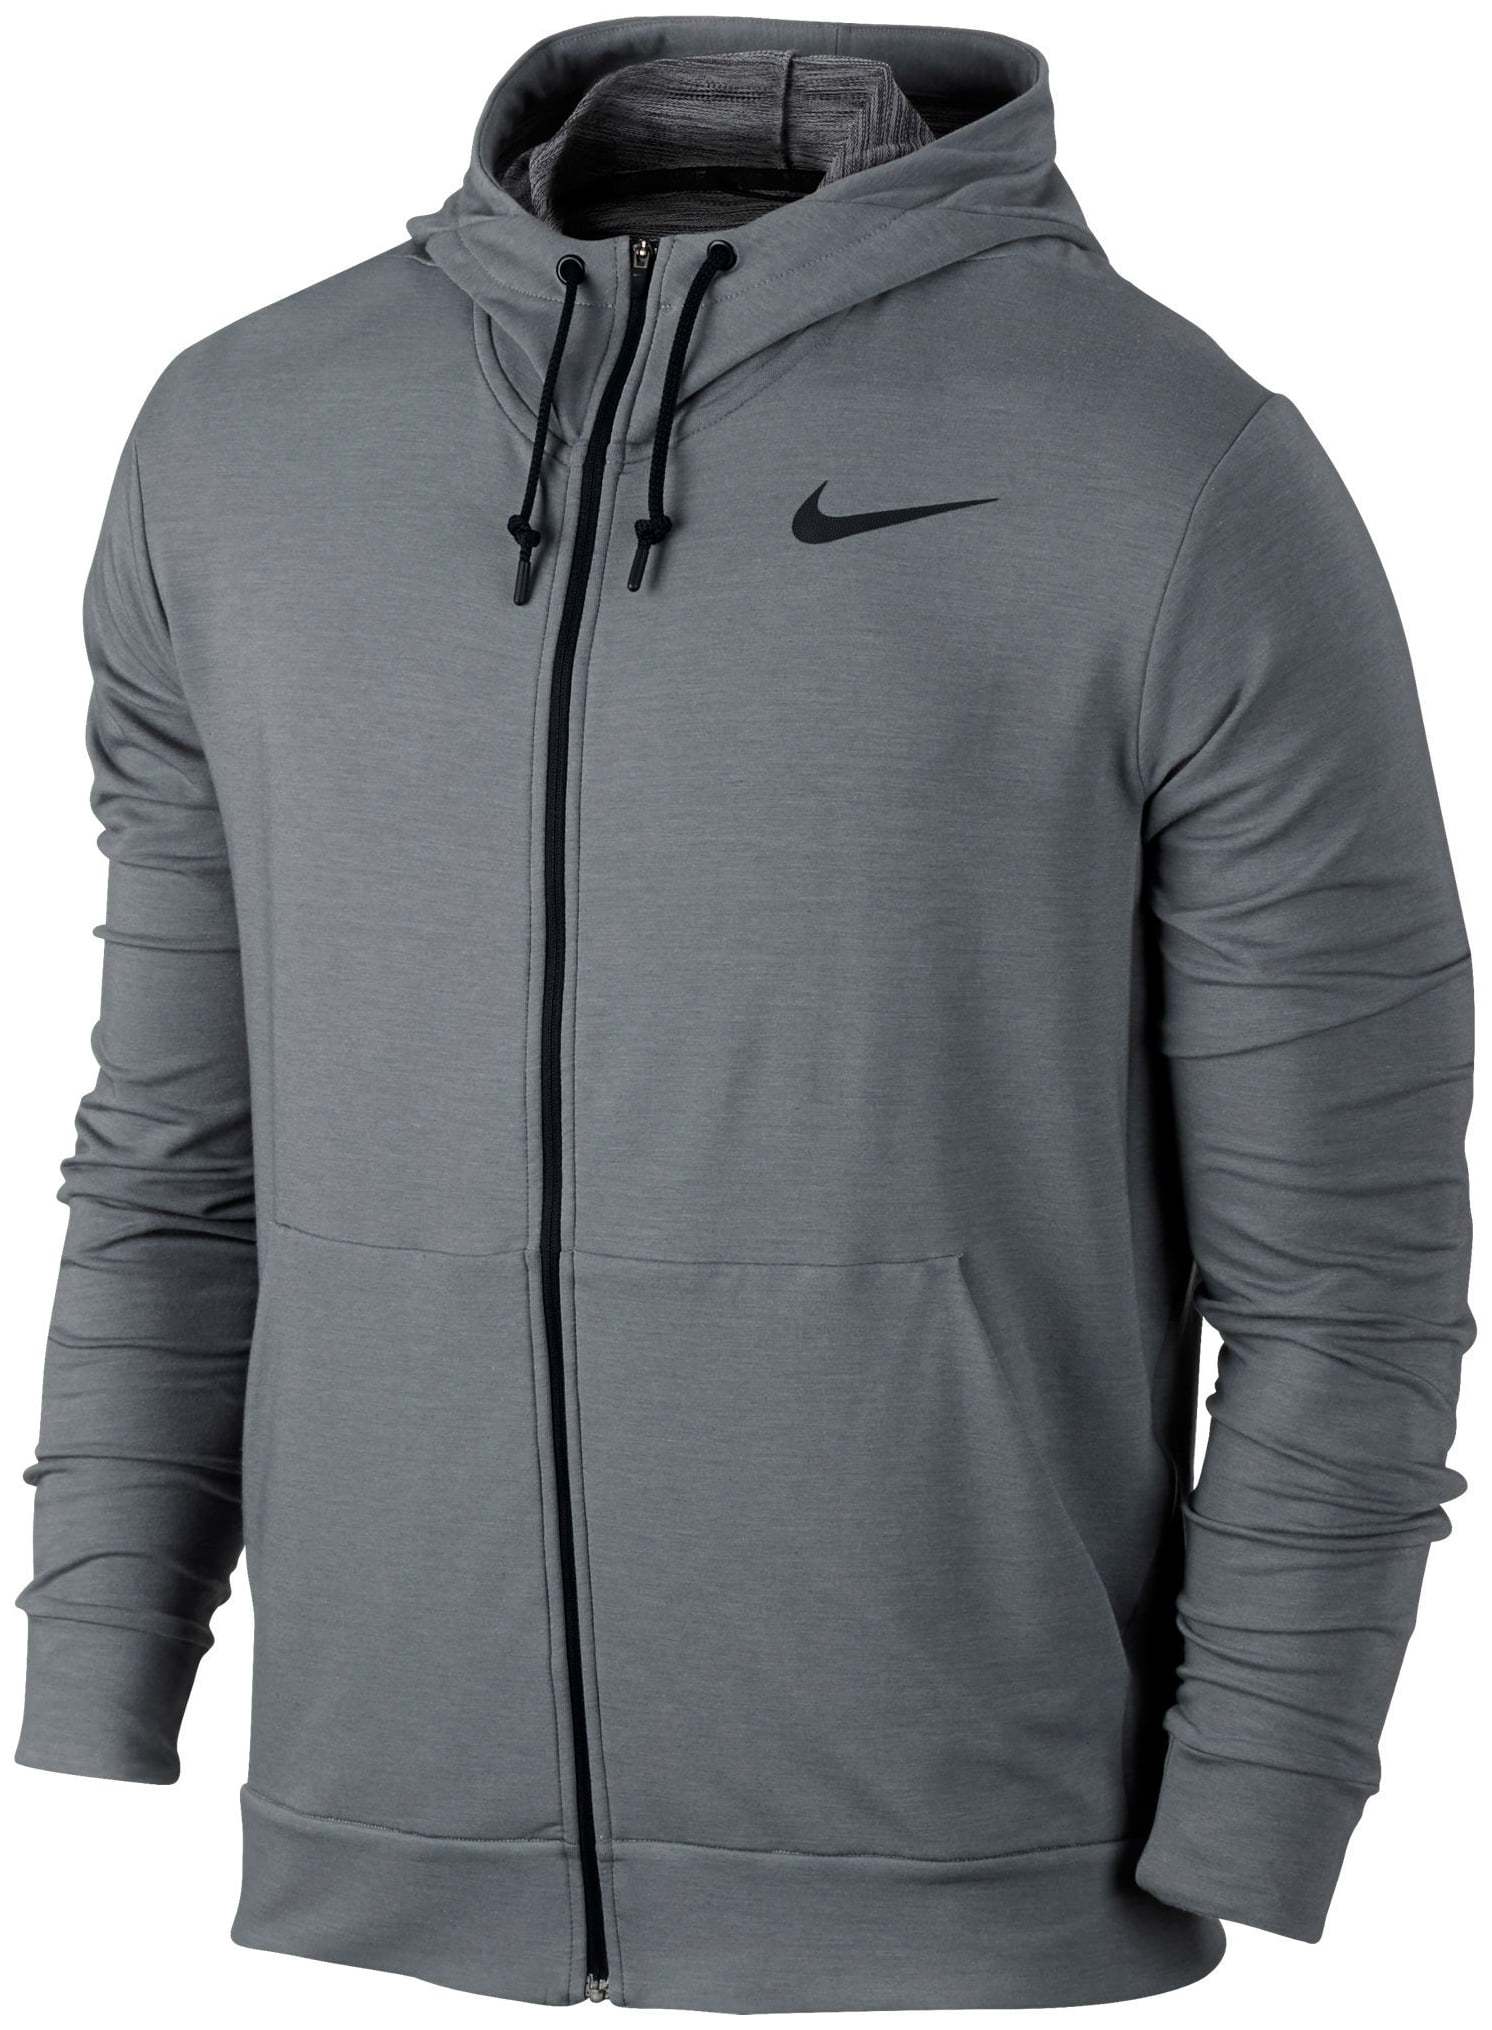 Nike Men's Dri-FIT Fleece Full Zip Hoodie - Cool Grey - Size XXL ...